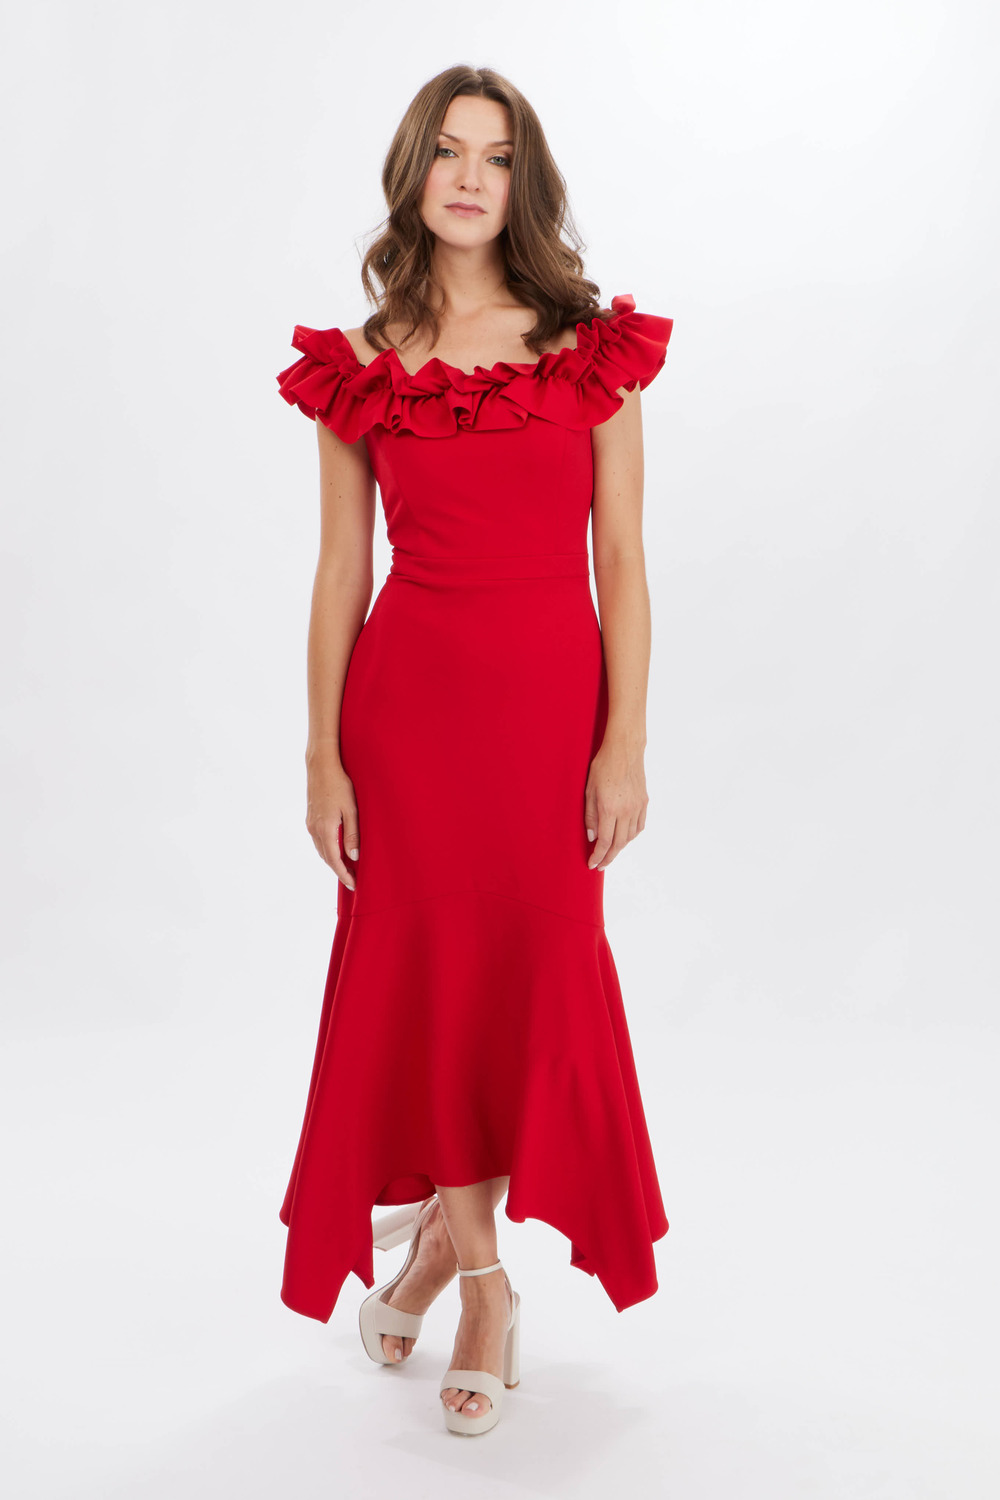 Ruffle Shoulder Dress Style 233741. Lipstick Red 173